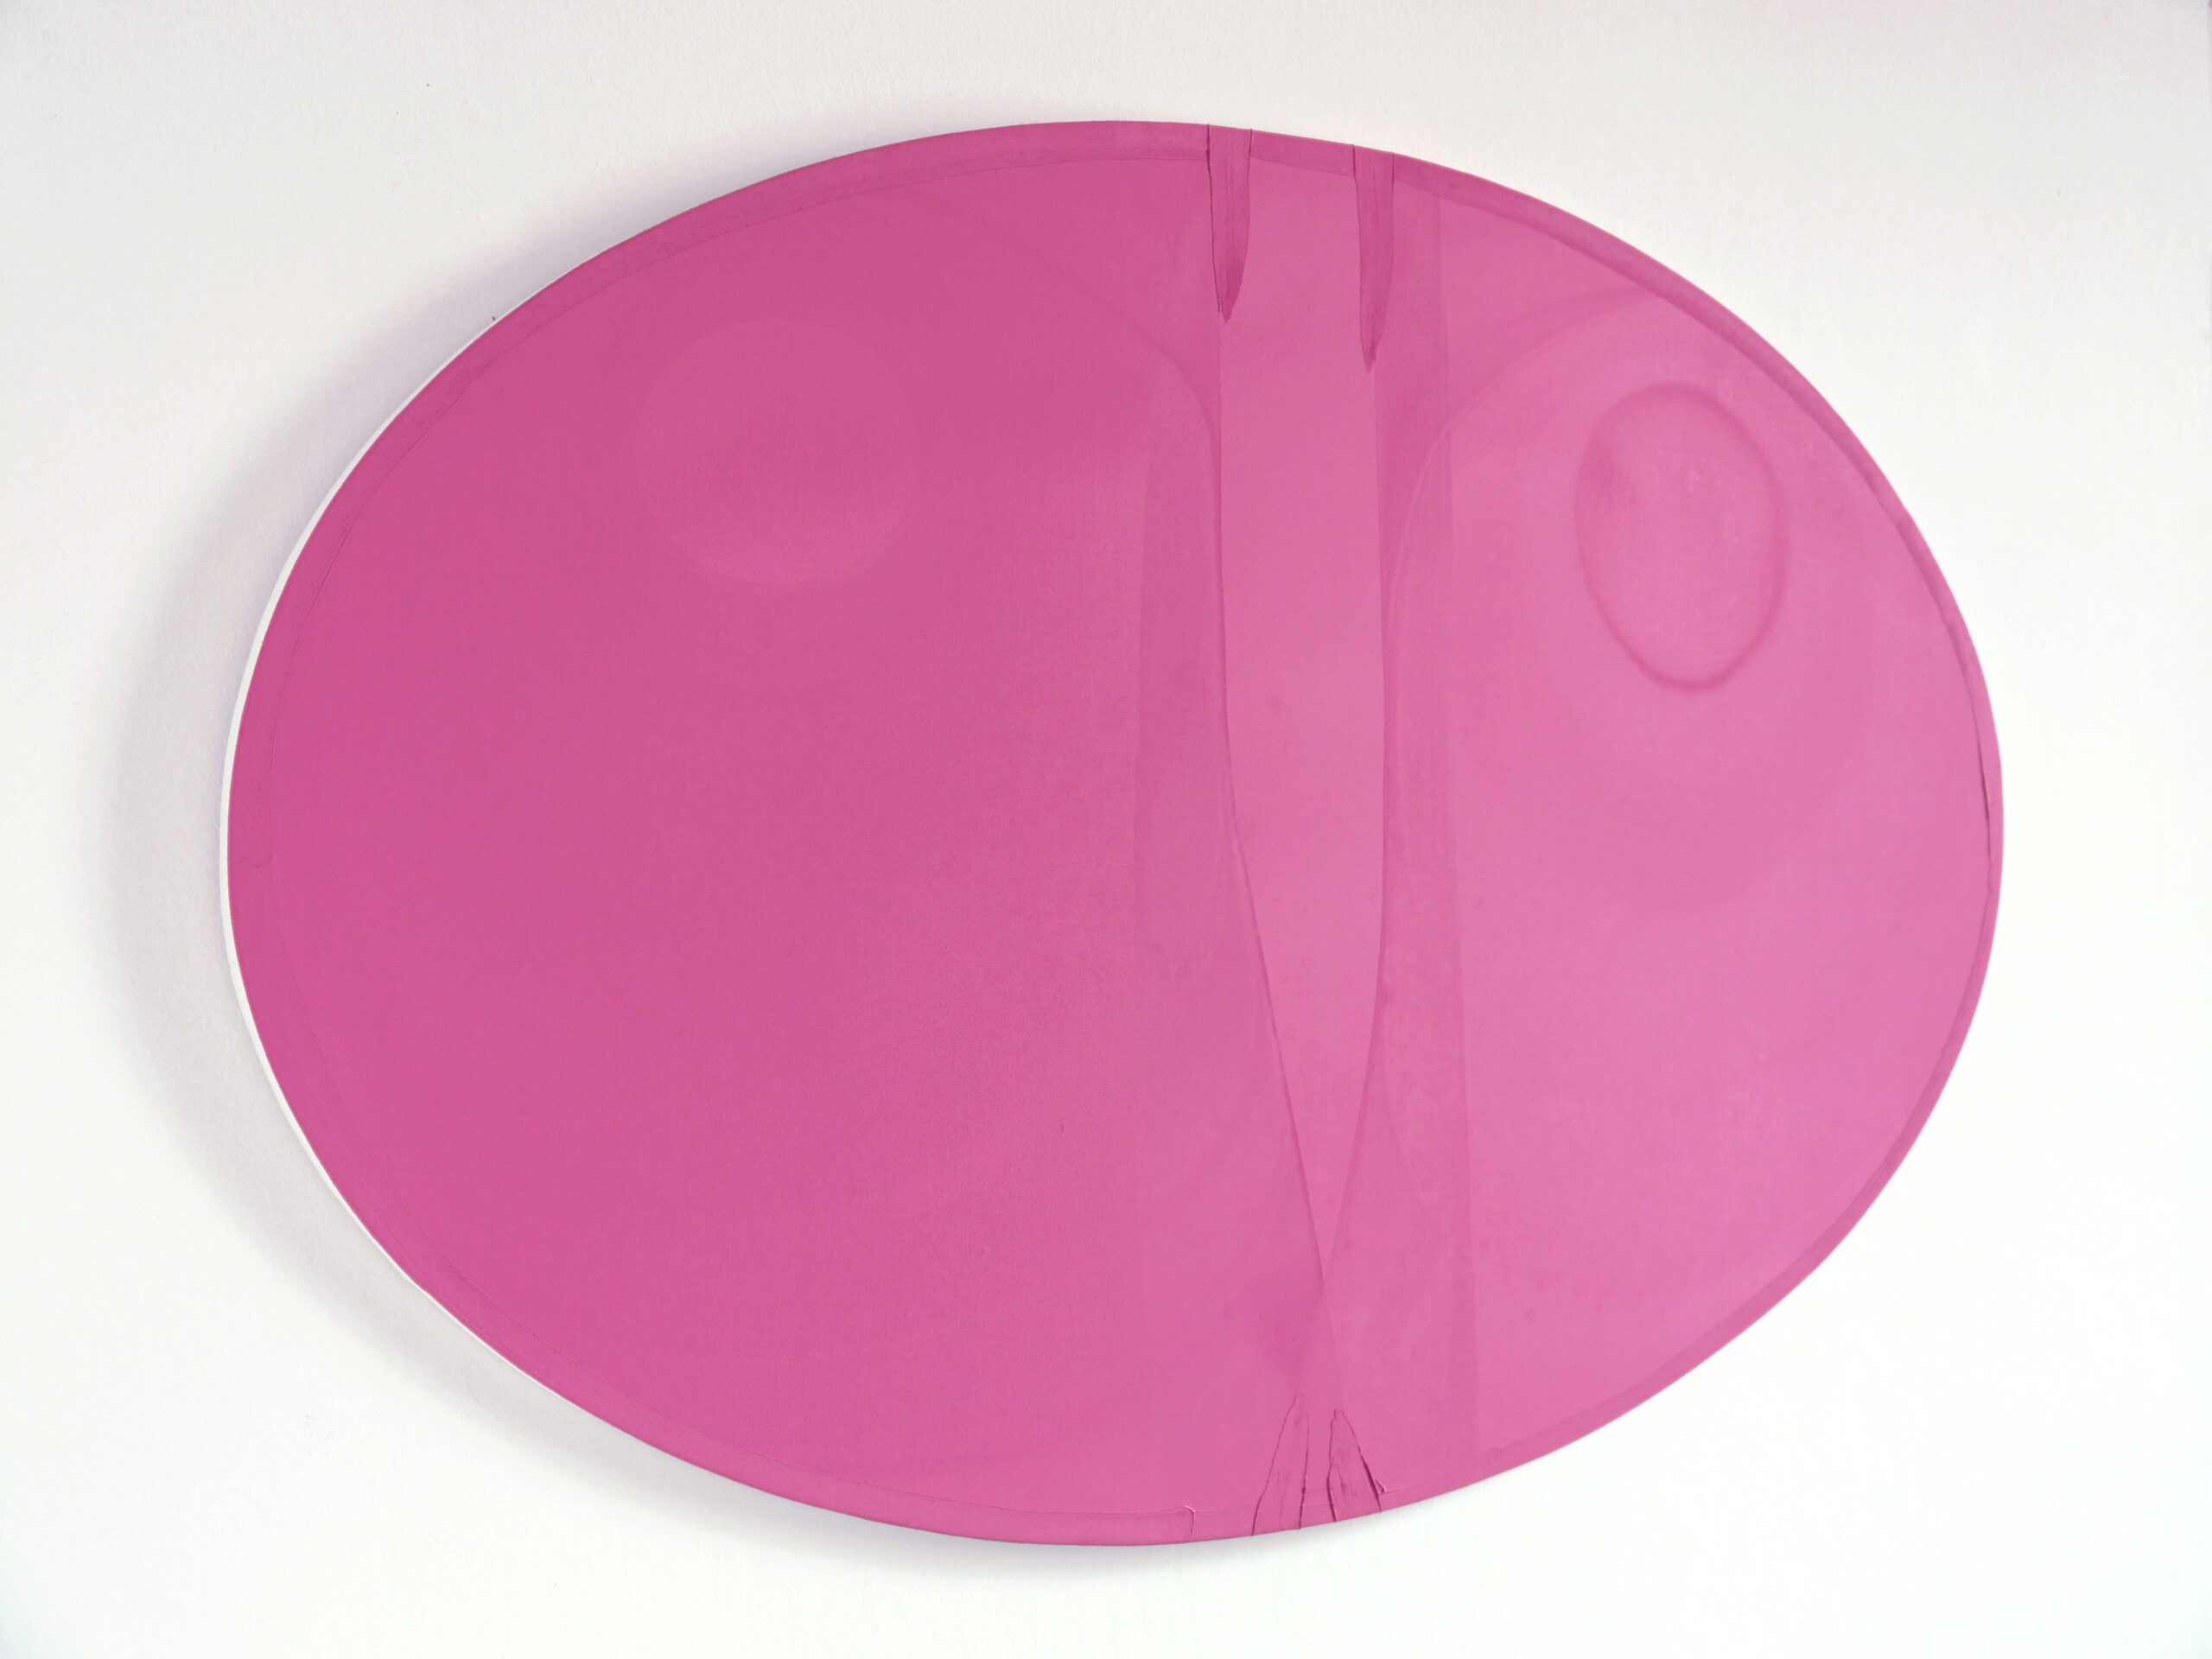 Antonio Catelani - flying kisses (pink), 2020 oil on canvas cm 80x120